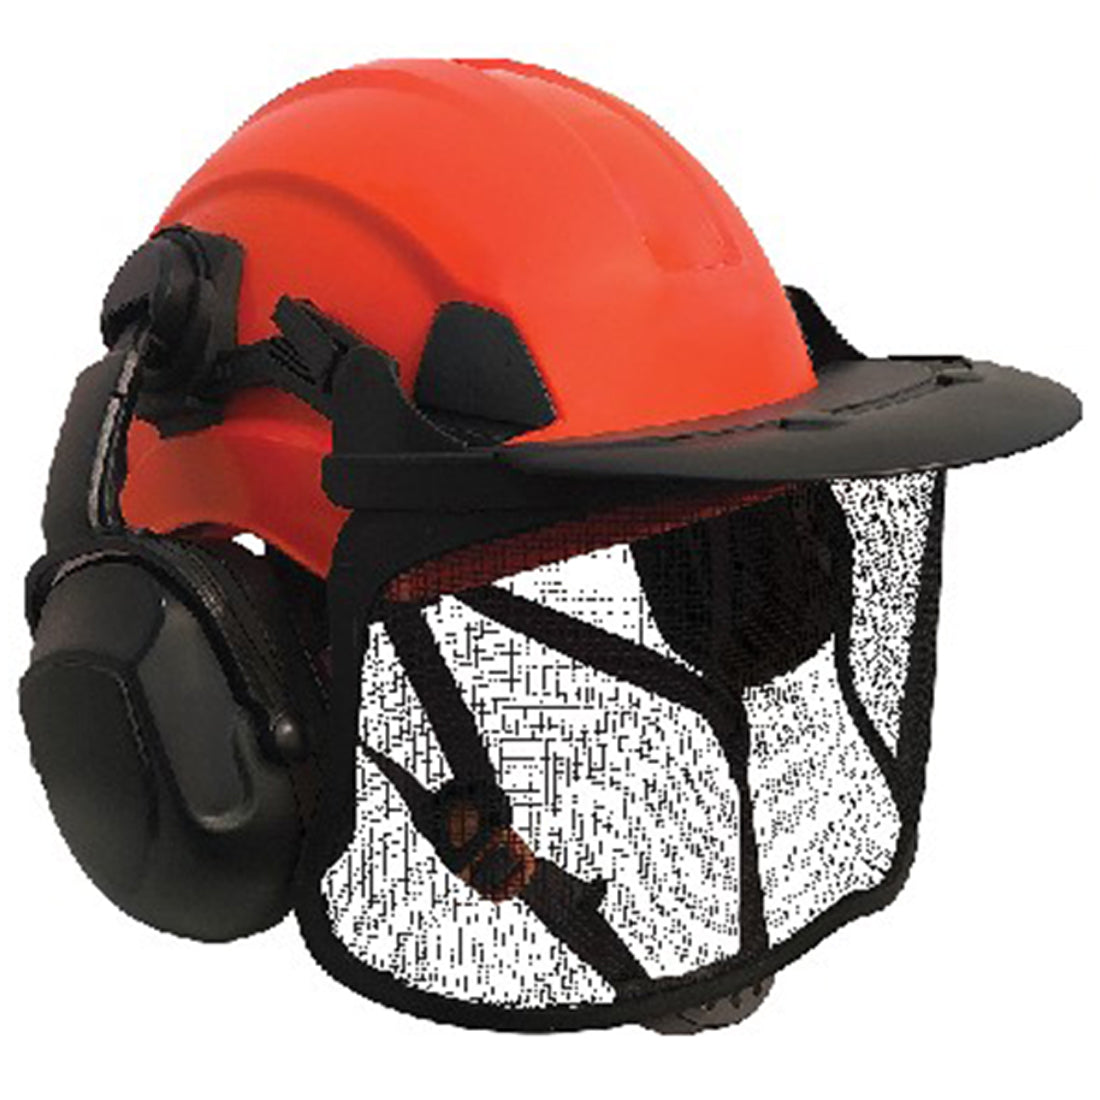 AHLBORN Helmet Face & Hearing Protection Kit